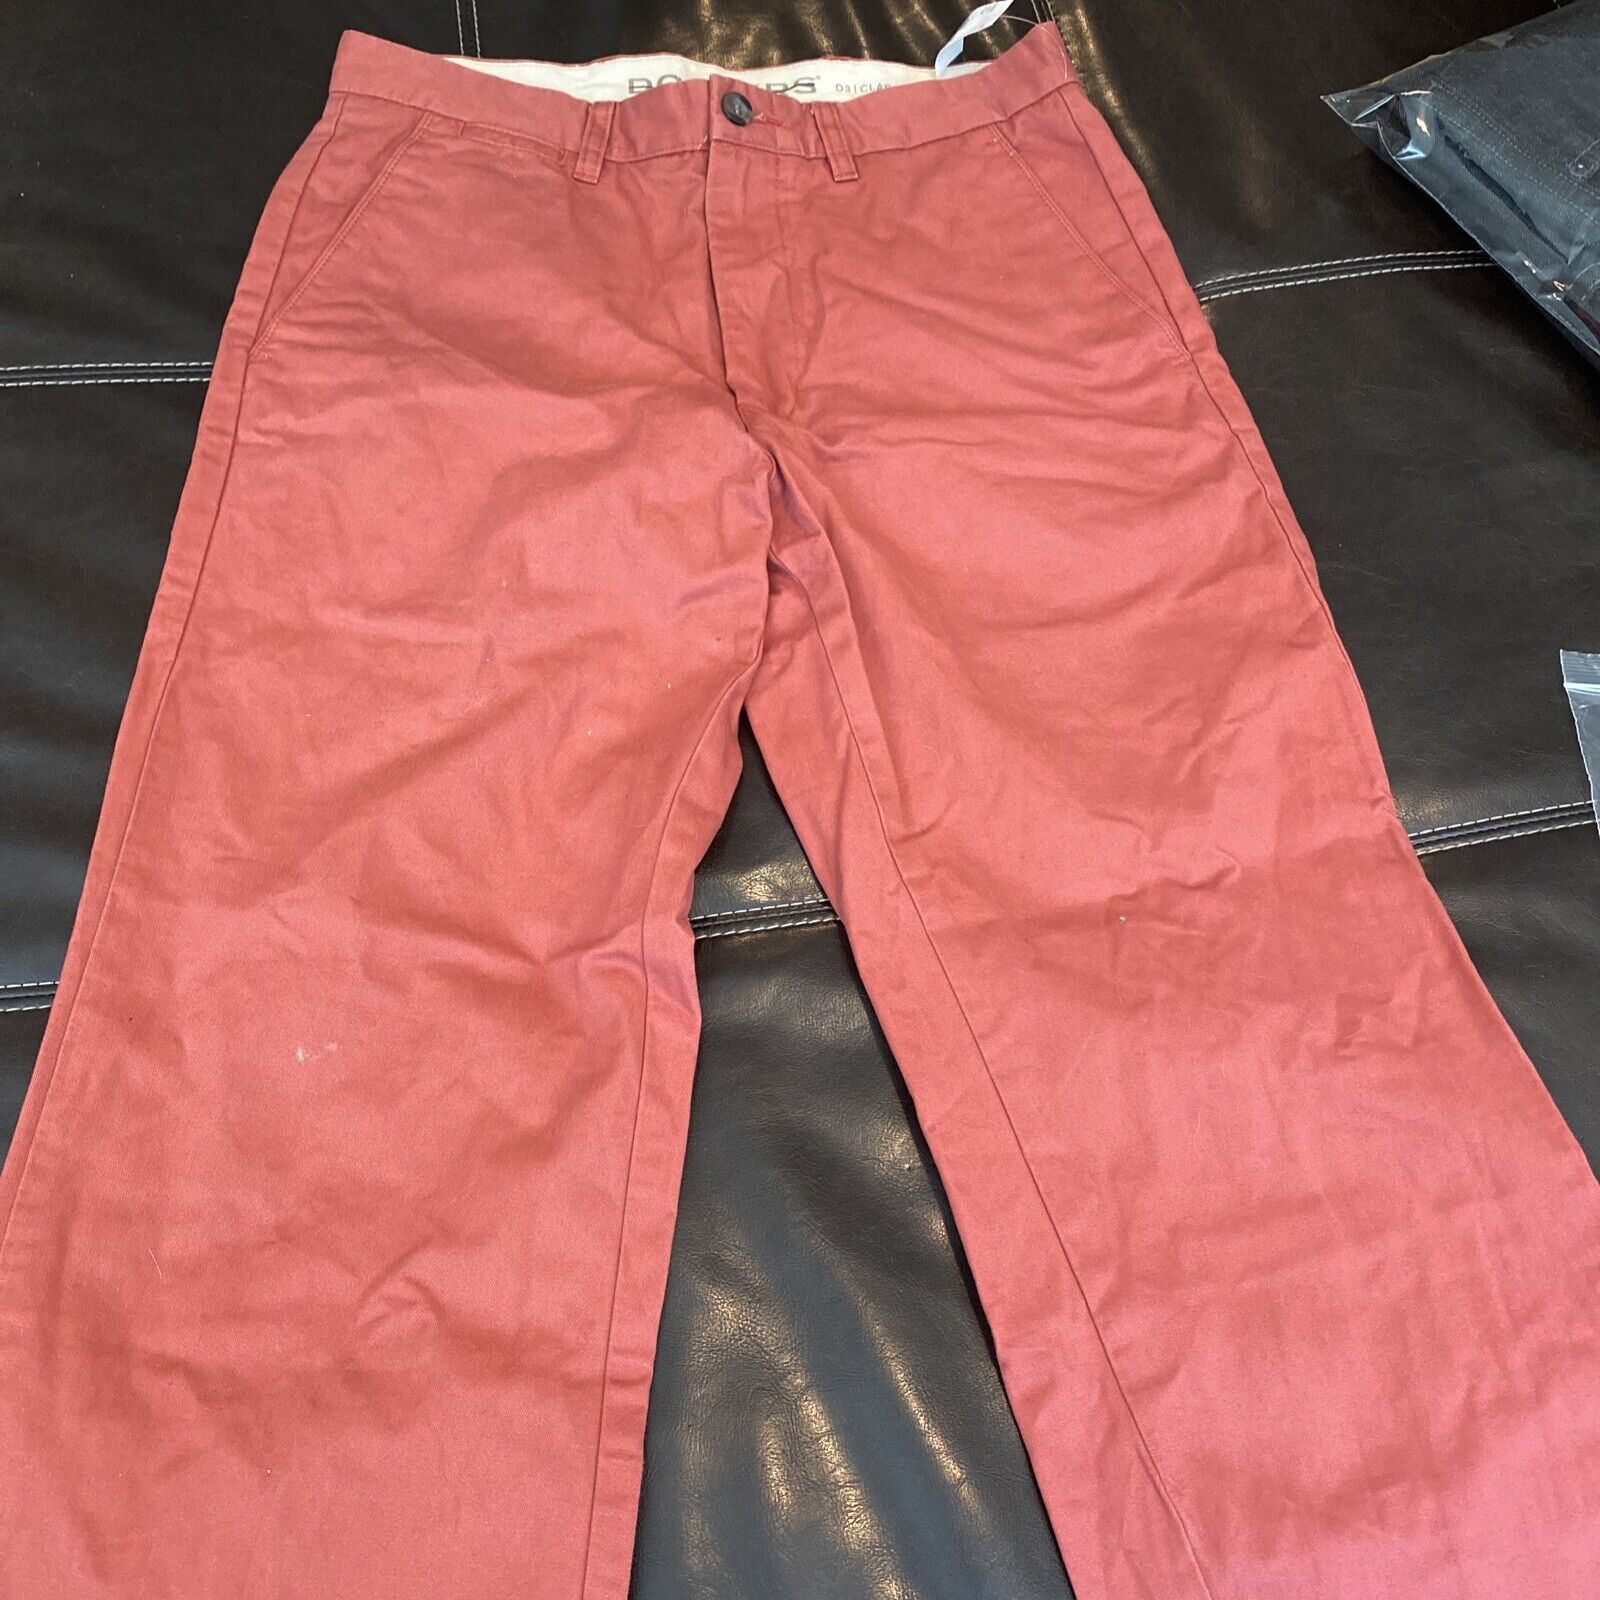 Dockers mens pants 32 X 32 red